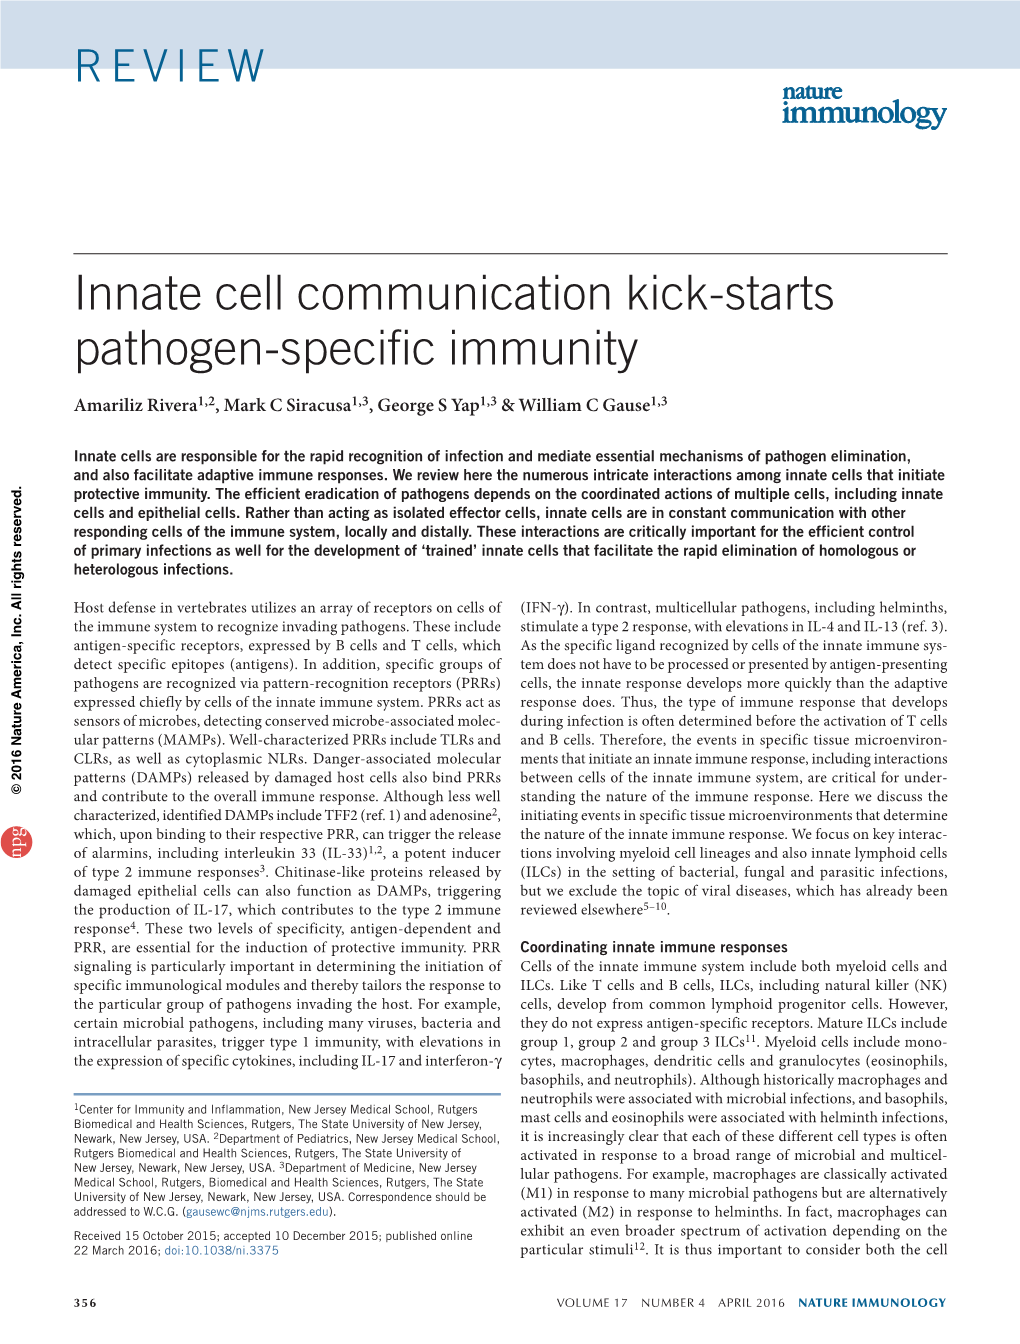 Innate Cell Communication Kick-Starts Pathogen-Specific Immunity